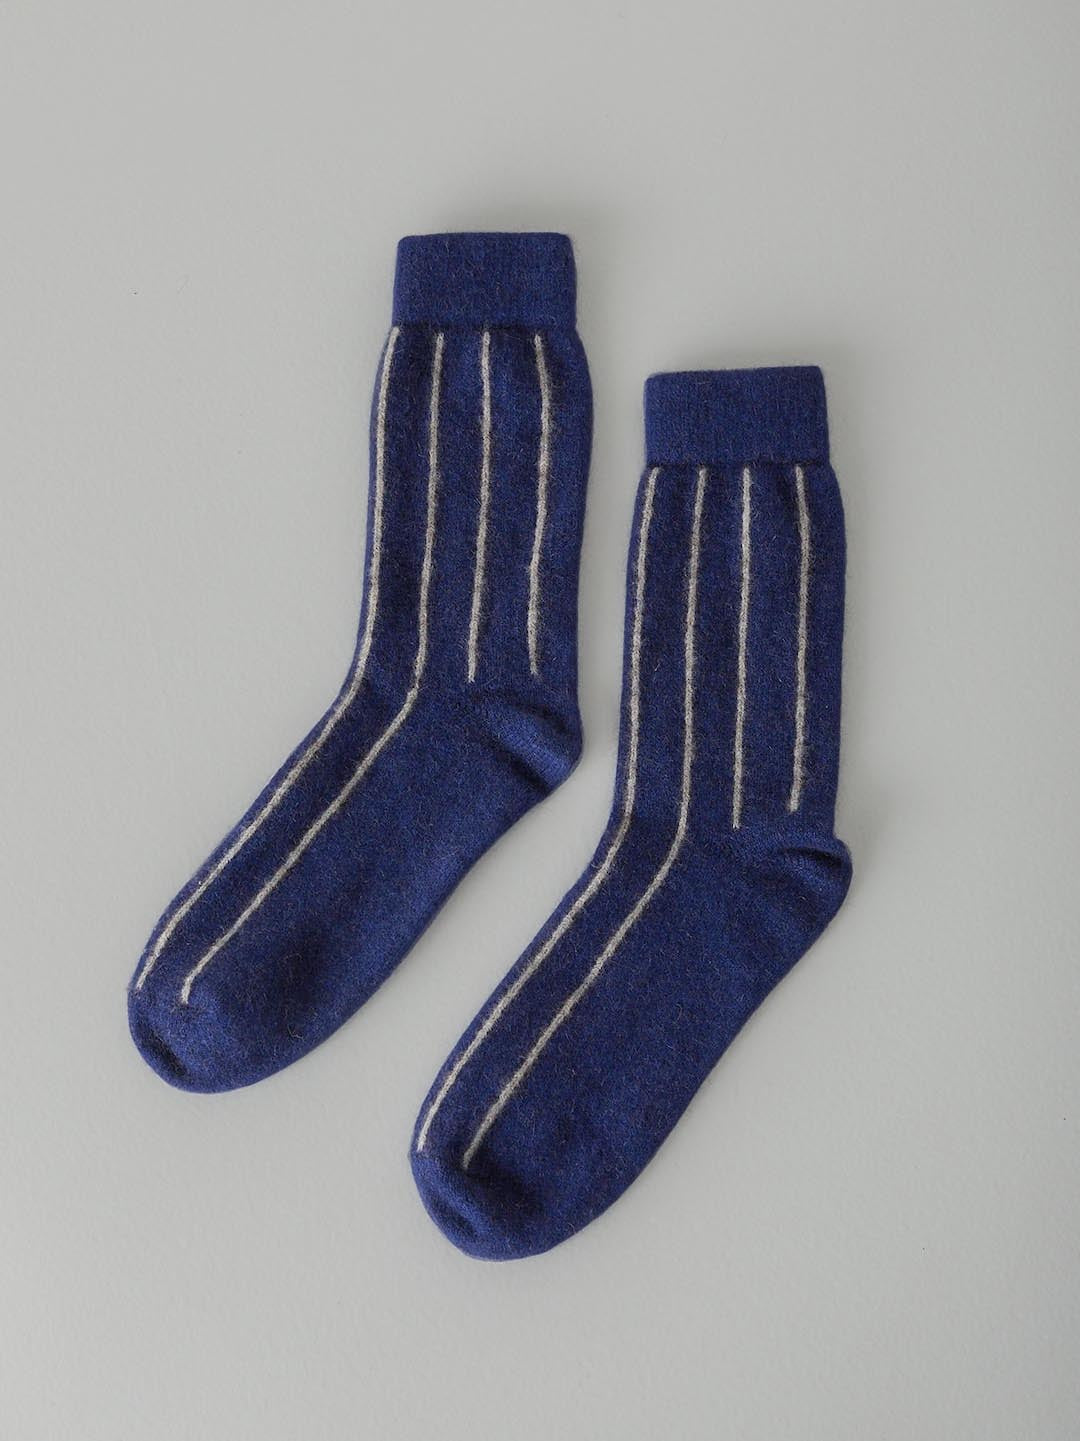 A pair of Francie Possum Merino Socks – Blue &amp; Natural Stripe lying flat on a light gray surface.